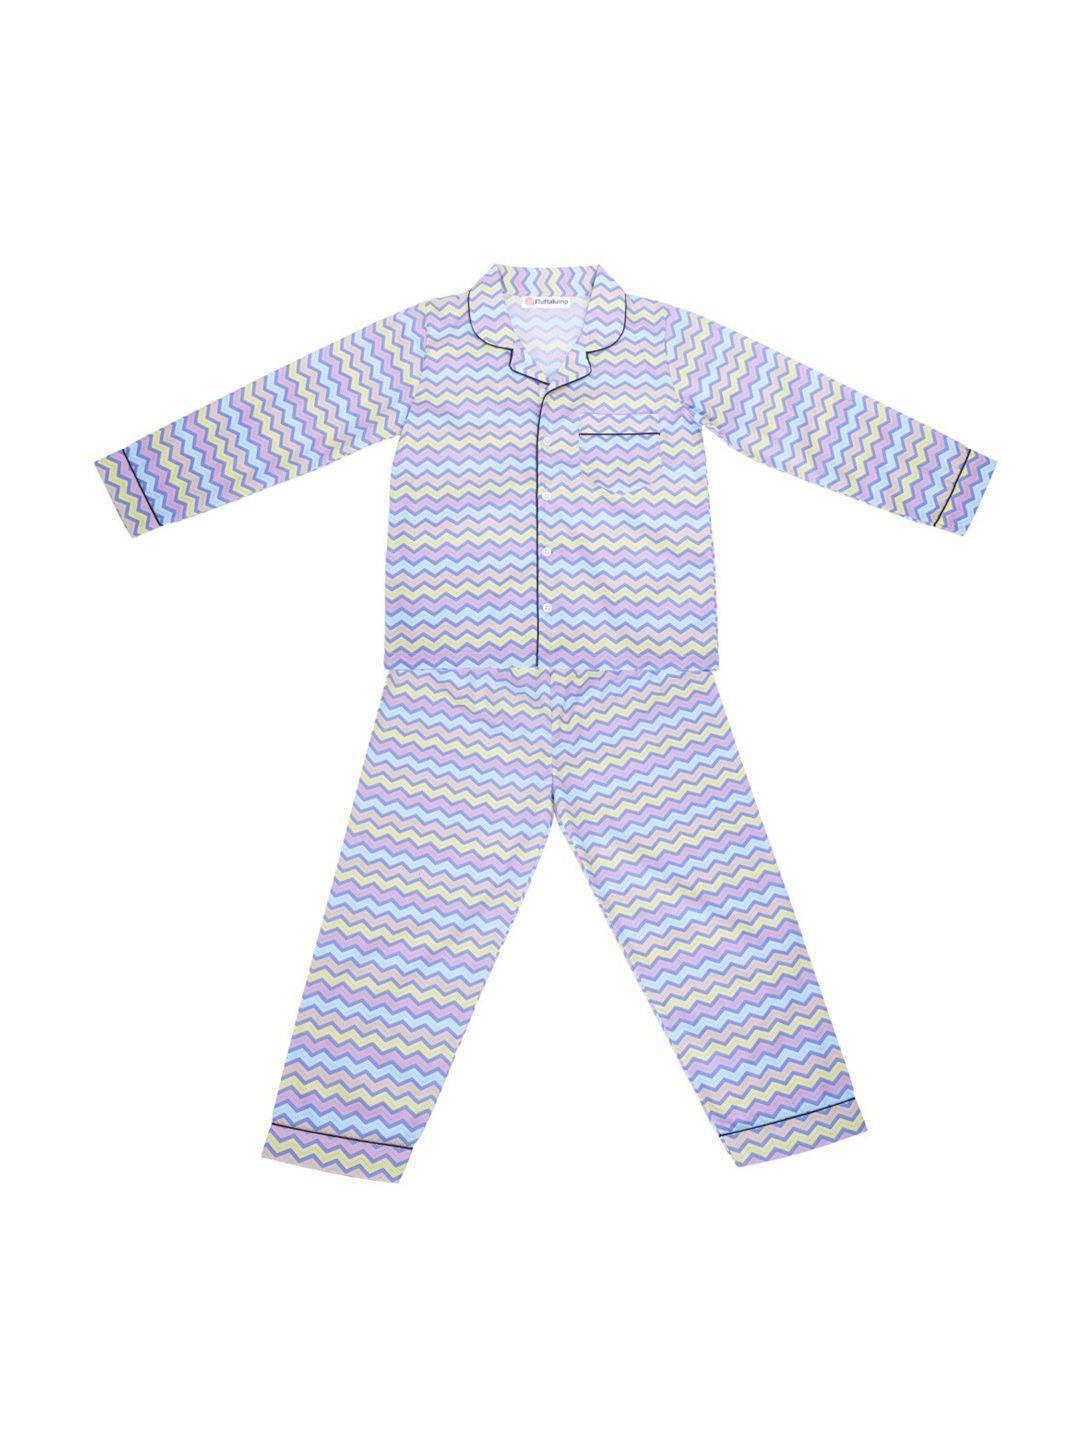 fluffalump kids geometric printed pure cotton night suit